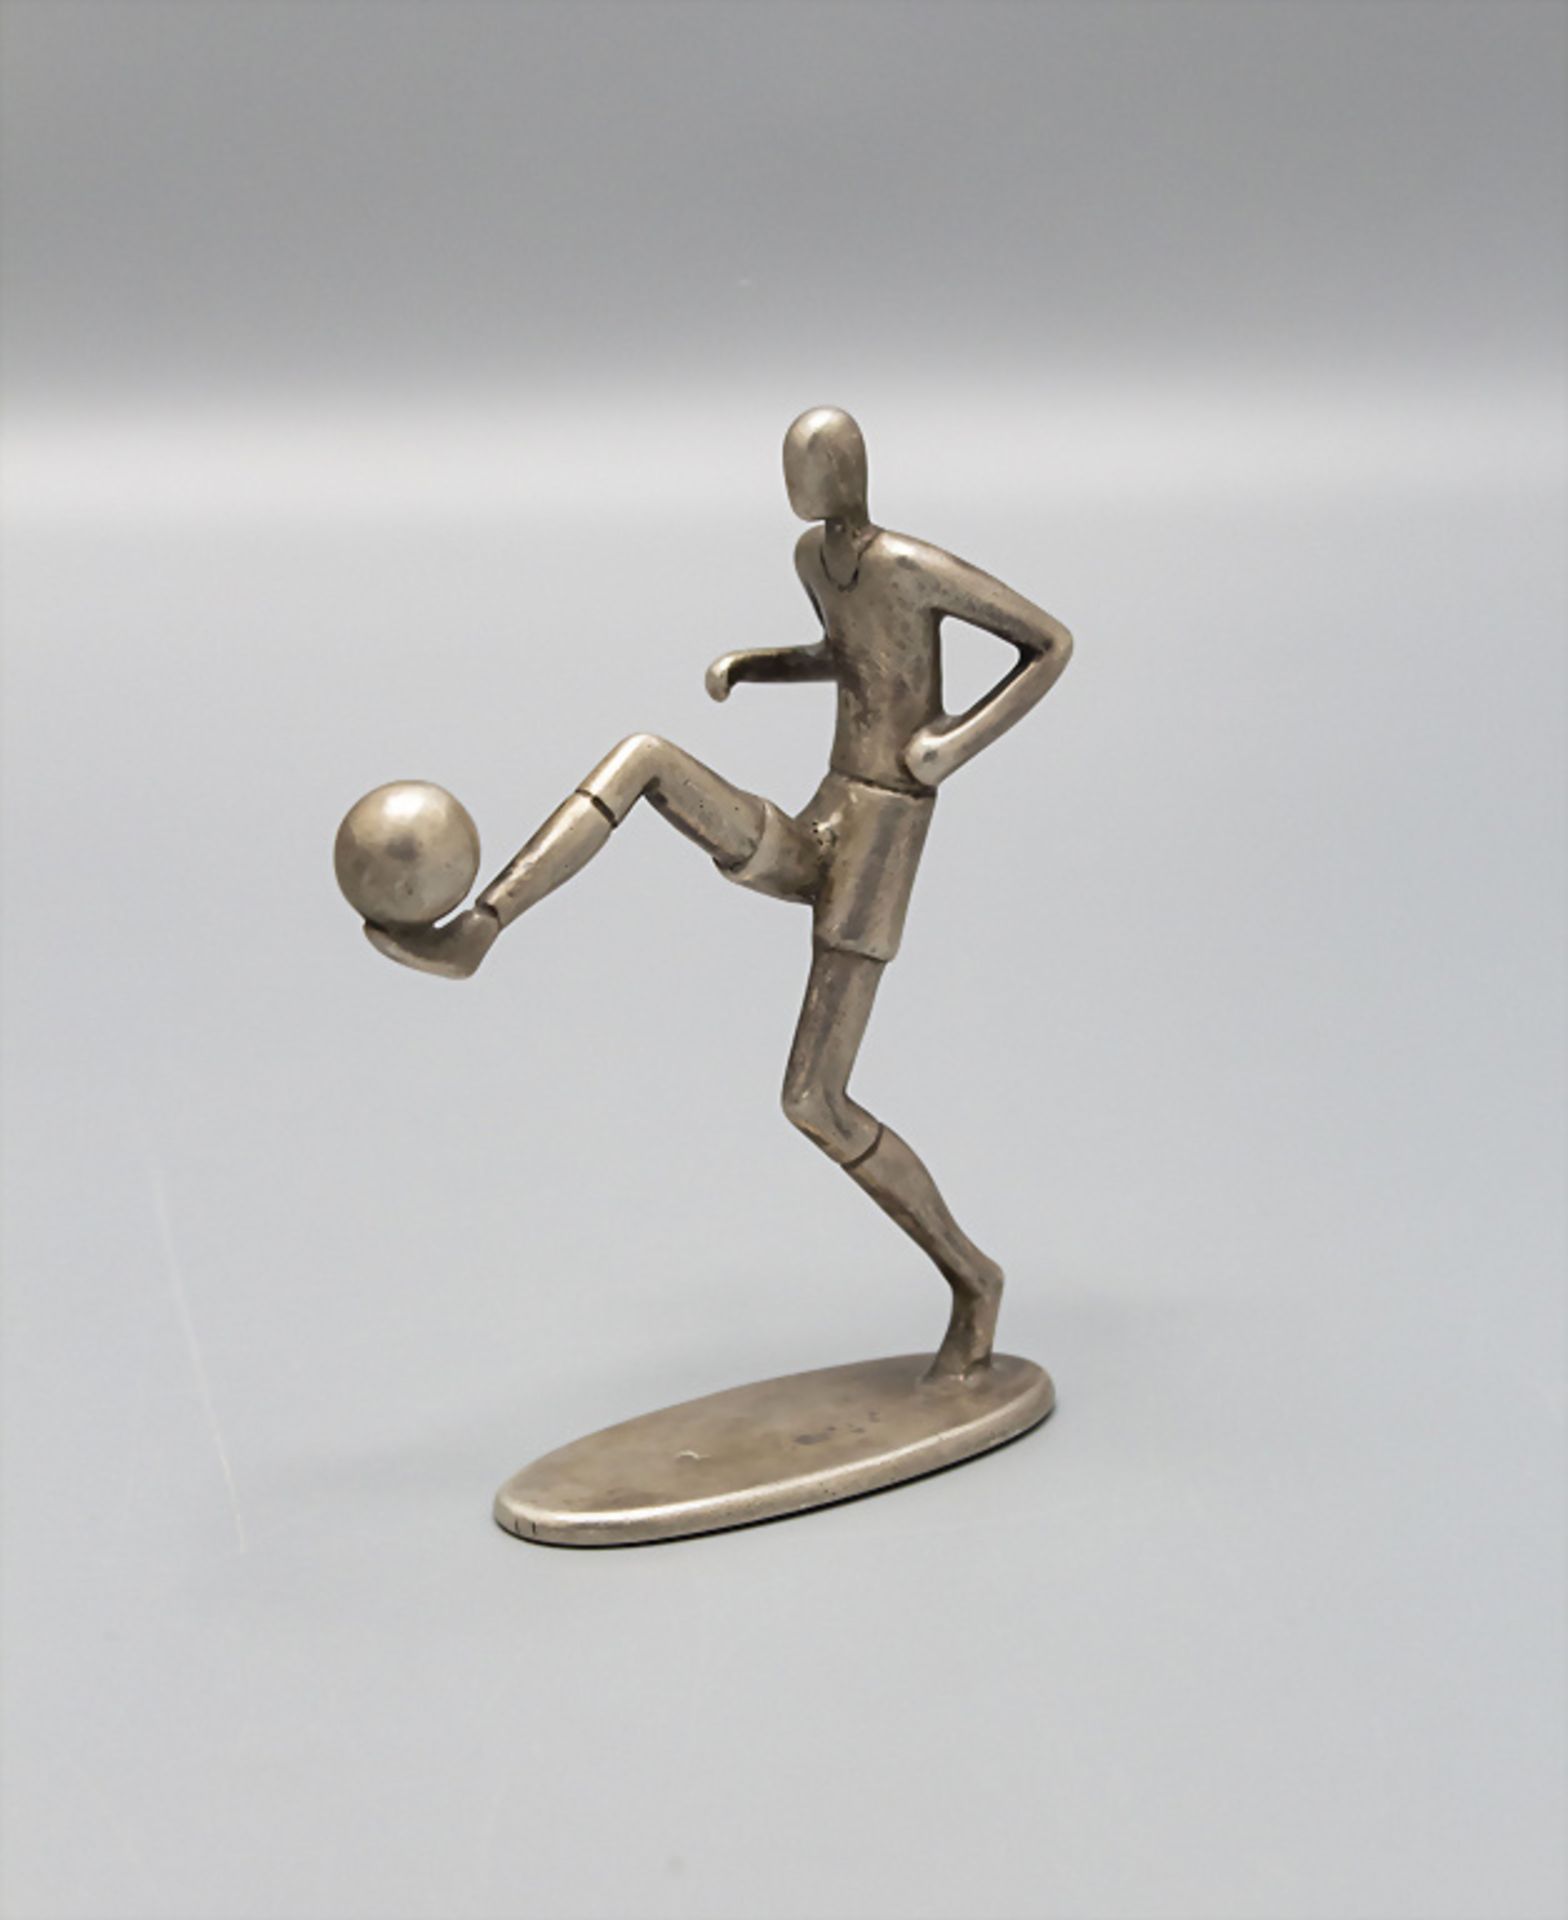 Art Déco Figur 'Fußballer' / An Art Deco figure 'Footballer', Werkstätte Hagenauer, Wien / Vienna